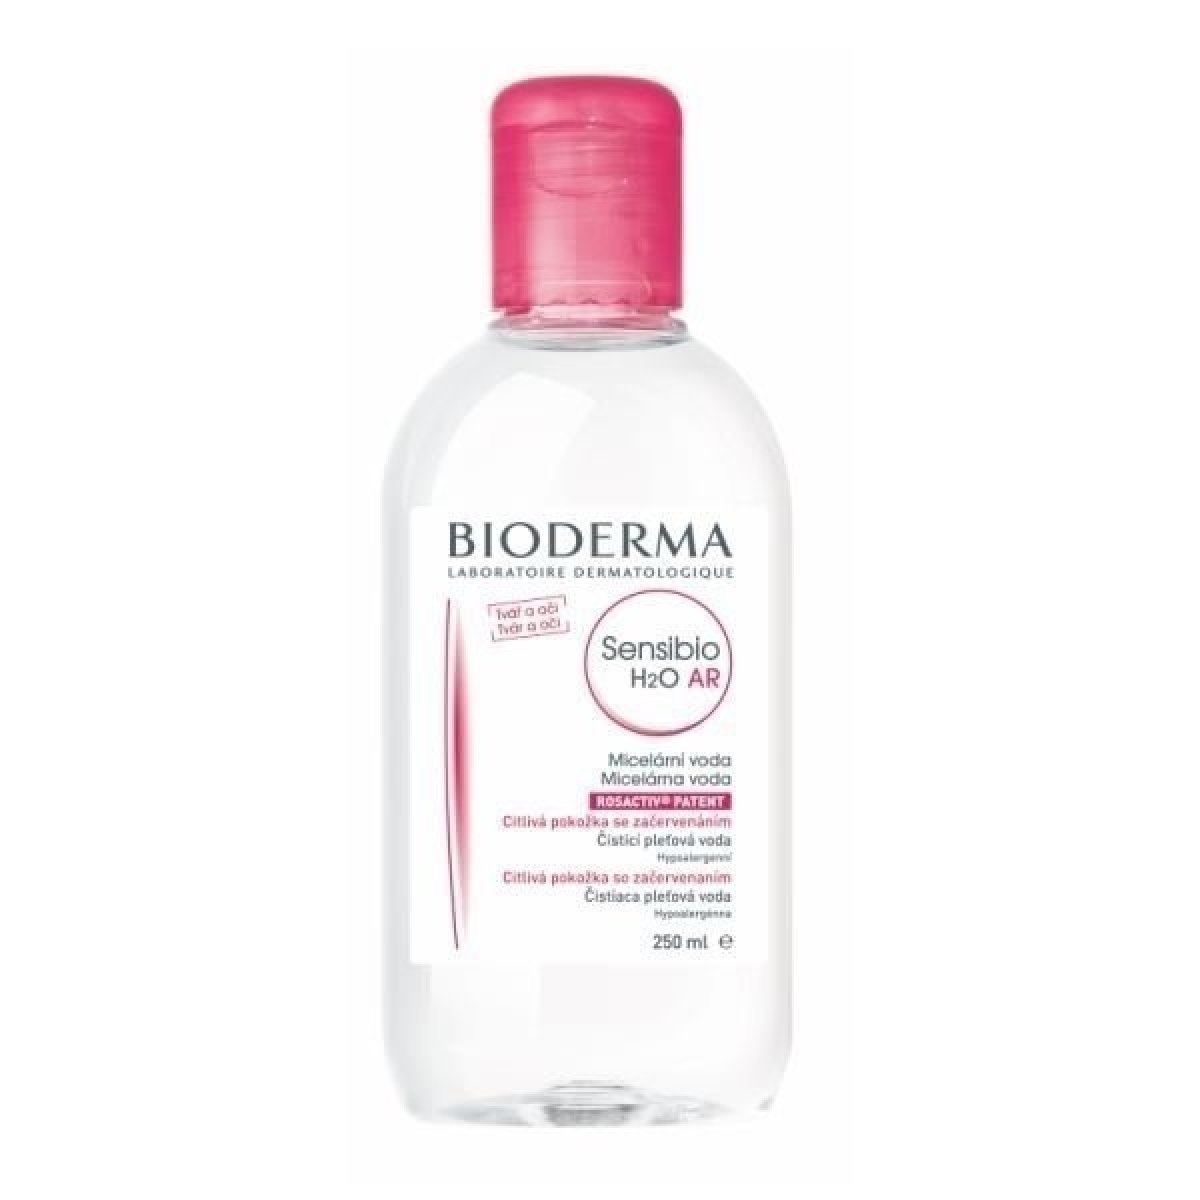 Bioderma Sensibio H2O AR micelární voda 250 ml od 149 Kč - Heureka.cz